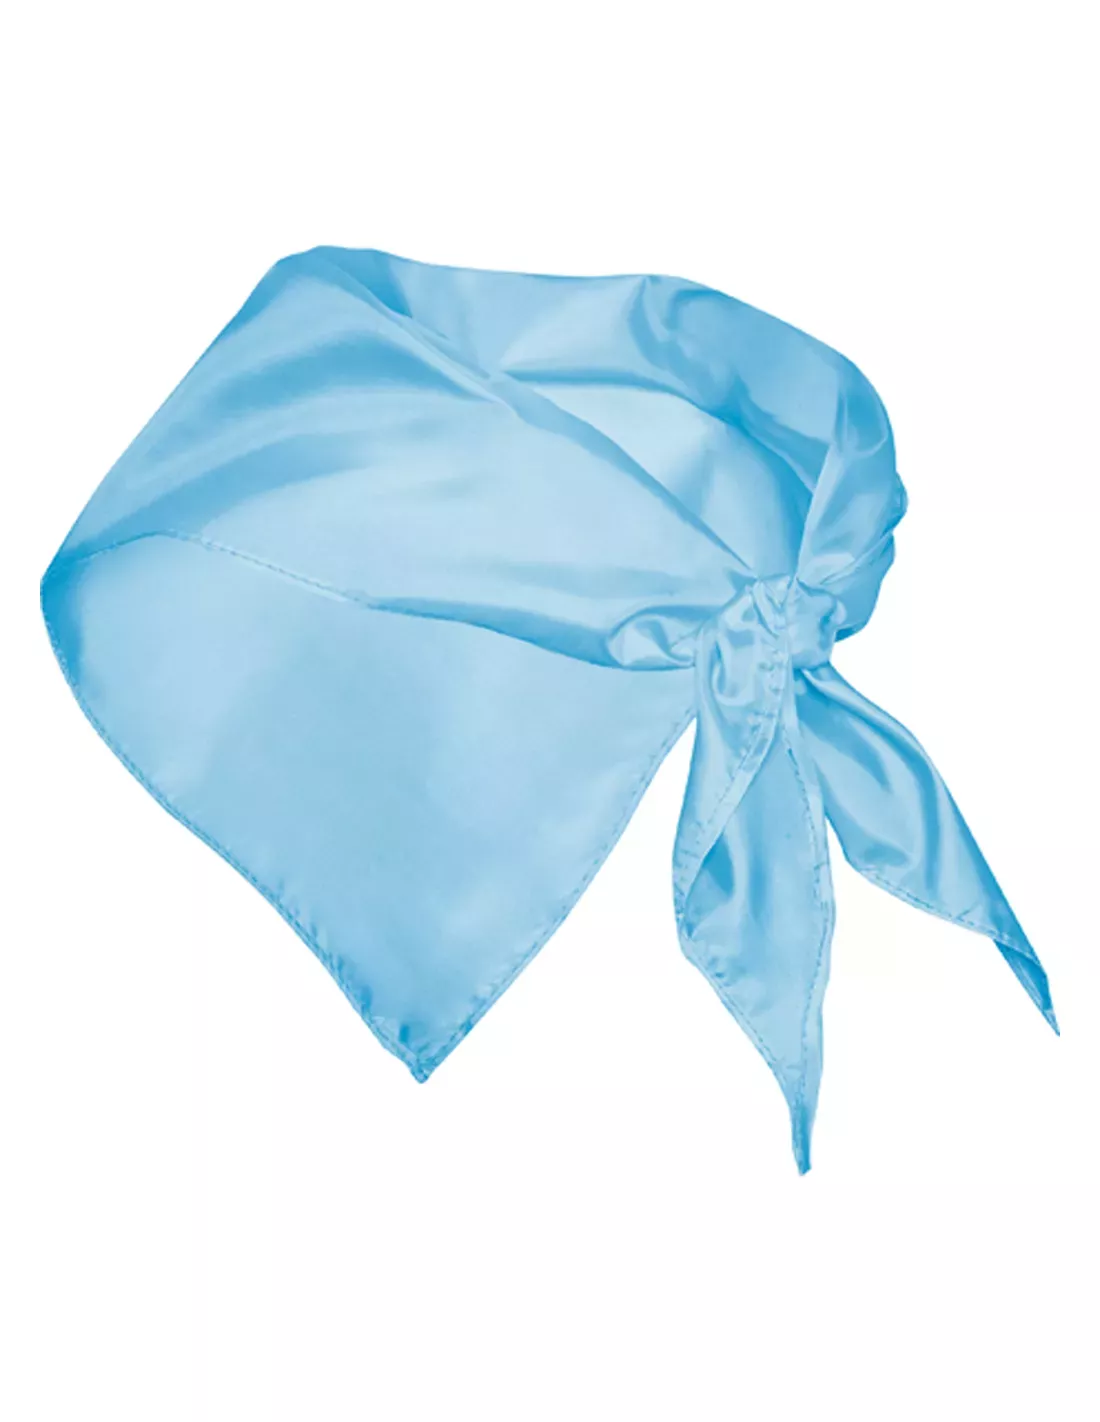 Pañuelo Triangular Personalizado de color azul celeste para personalizar con tu logo